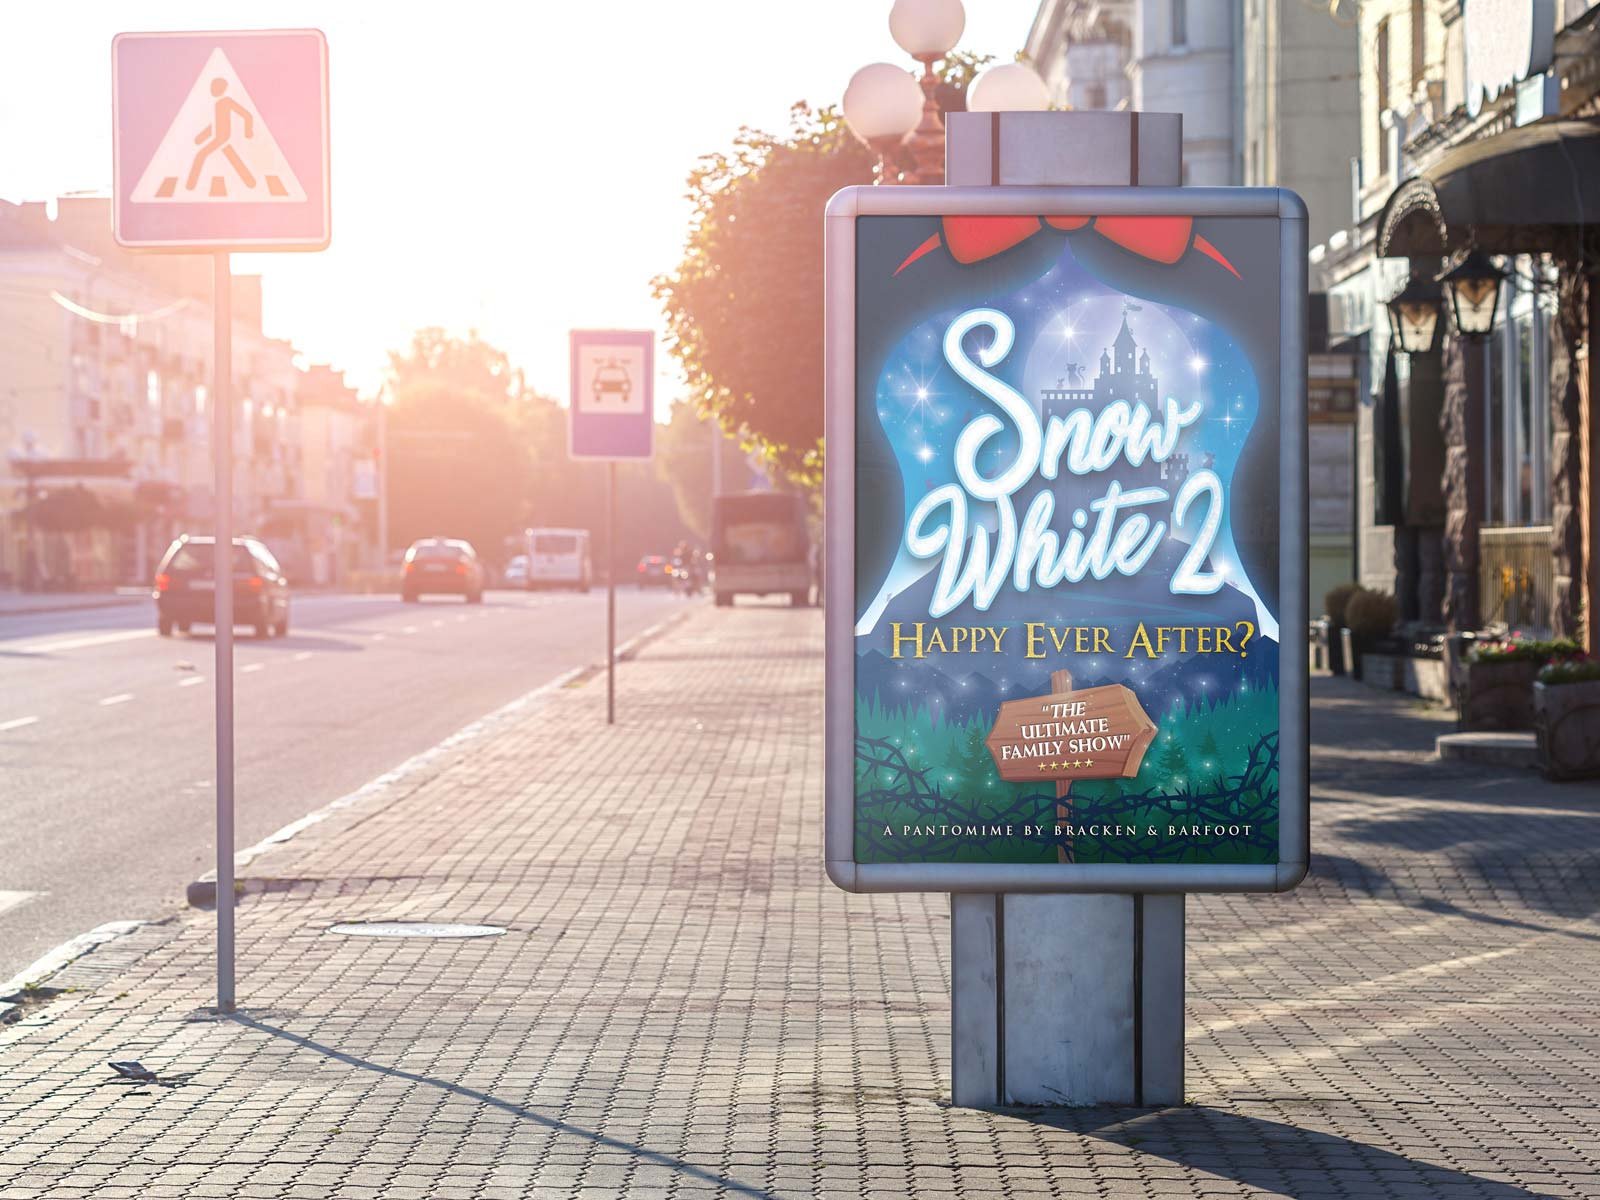 snow white 2 billboard on sunny street